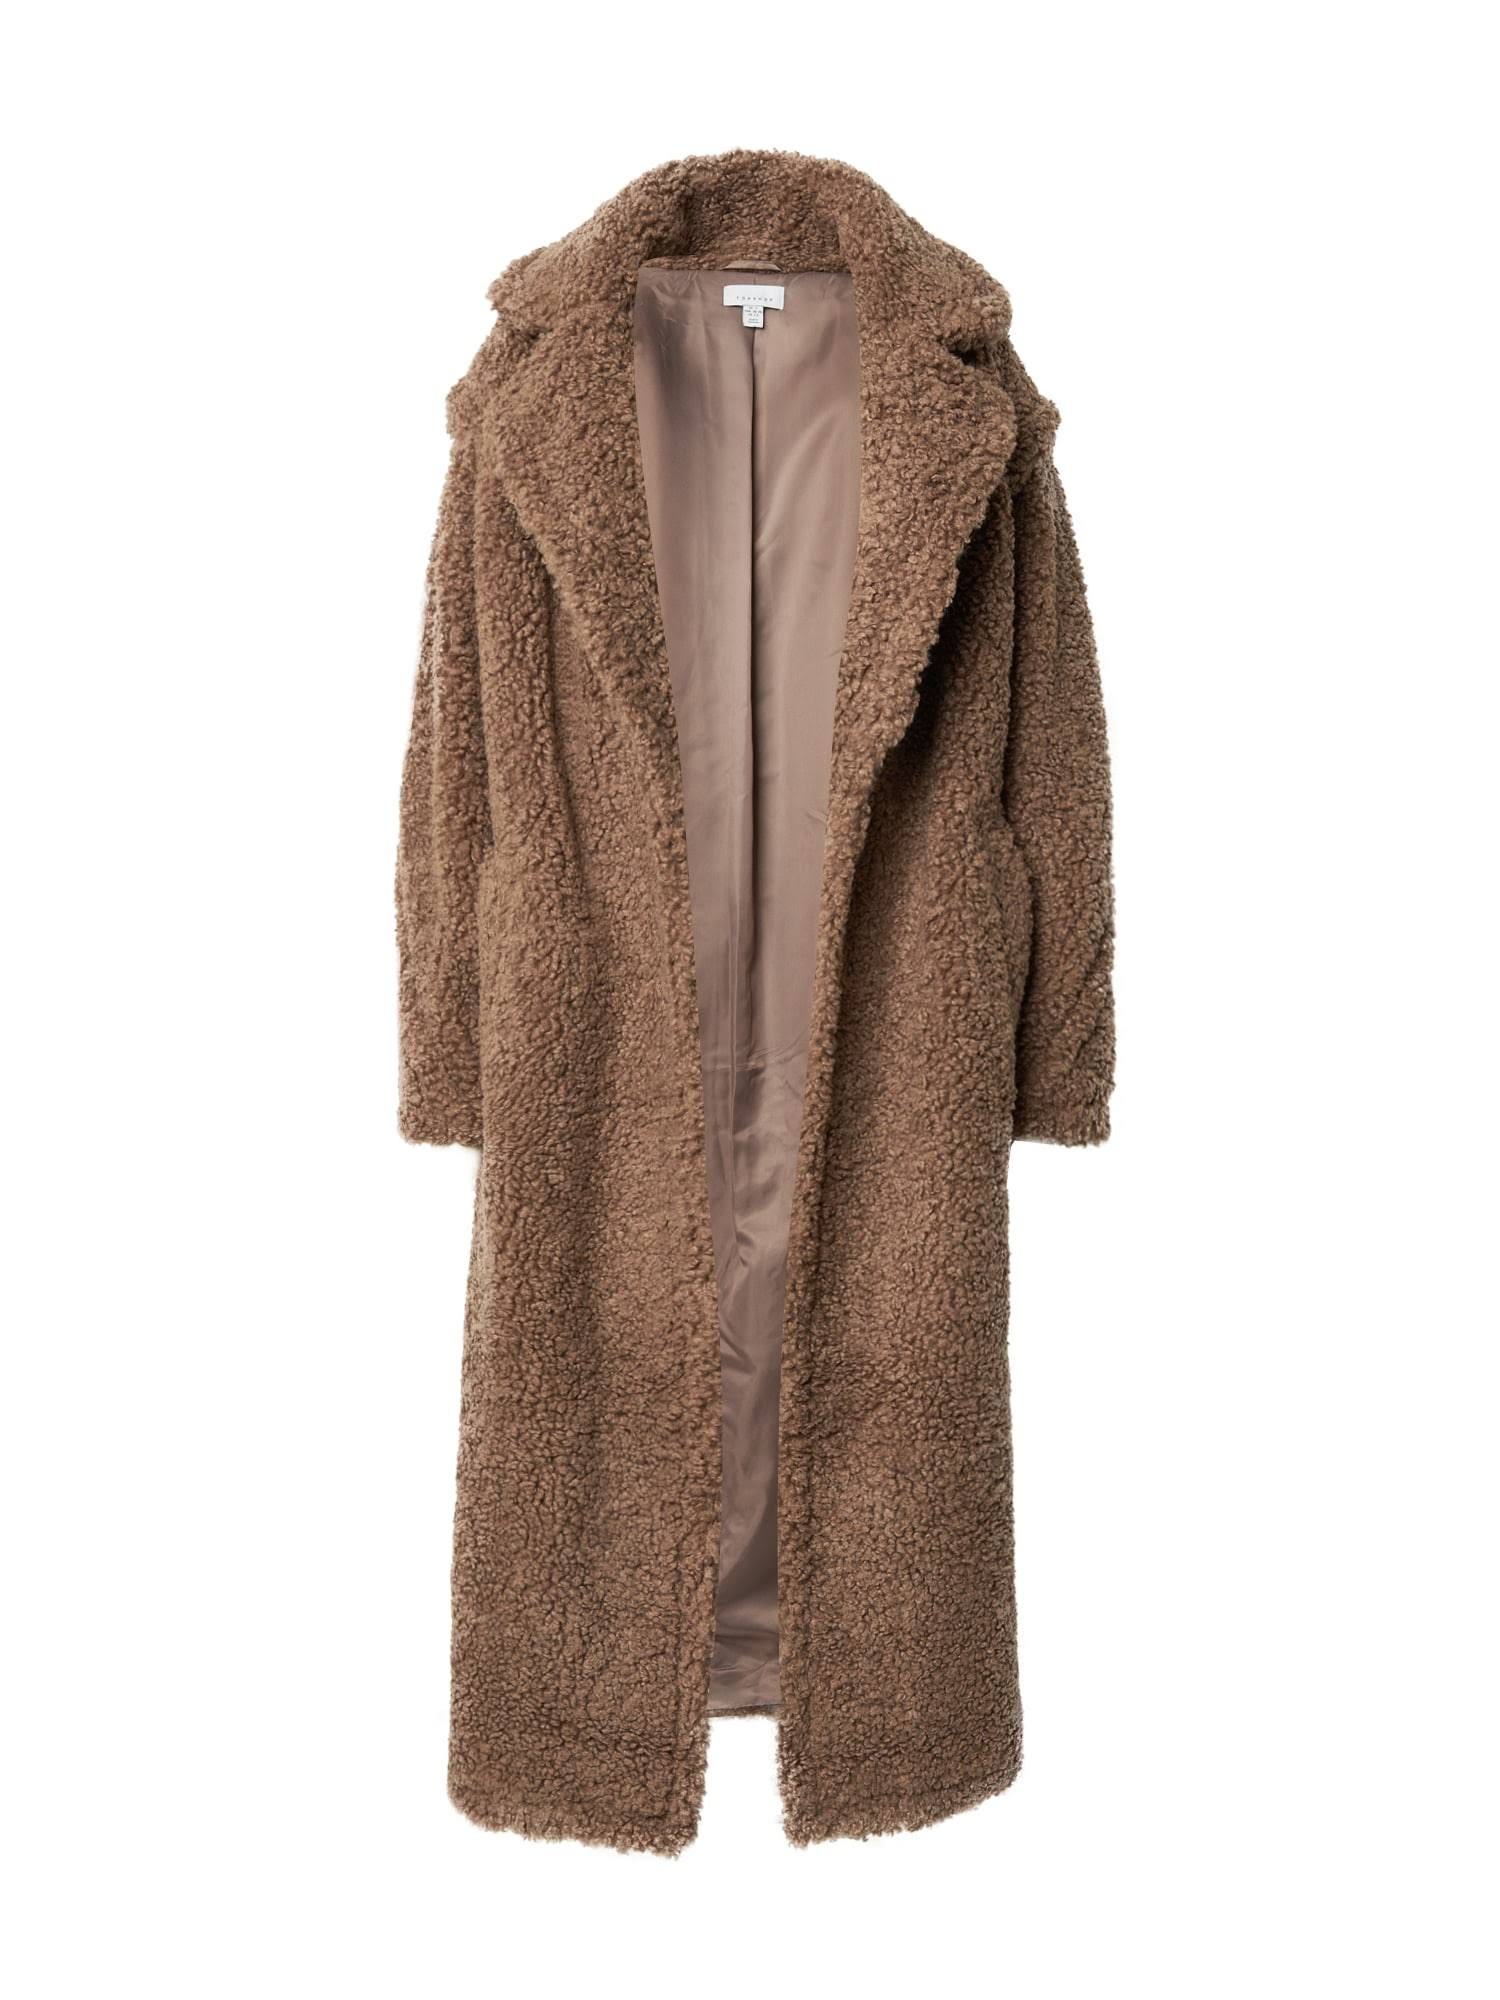 Long Line Brown Teddy Bear Coat by Topshop | Image